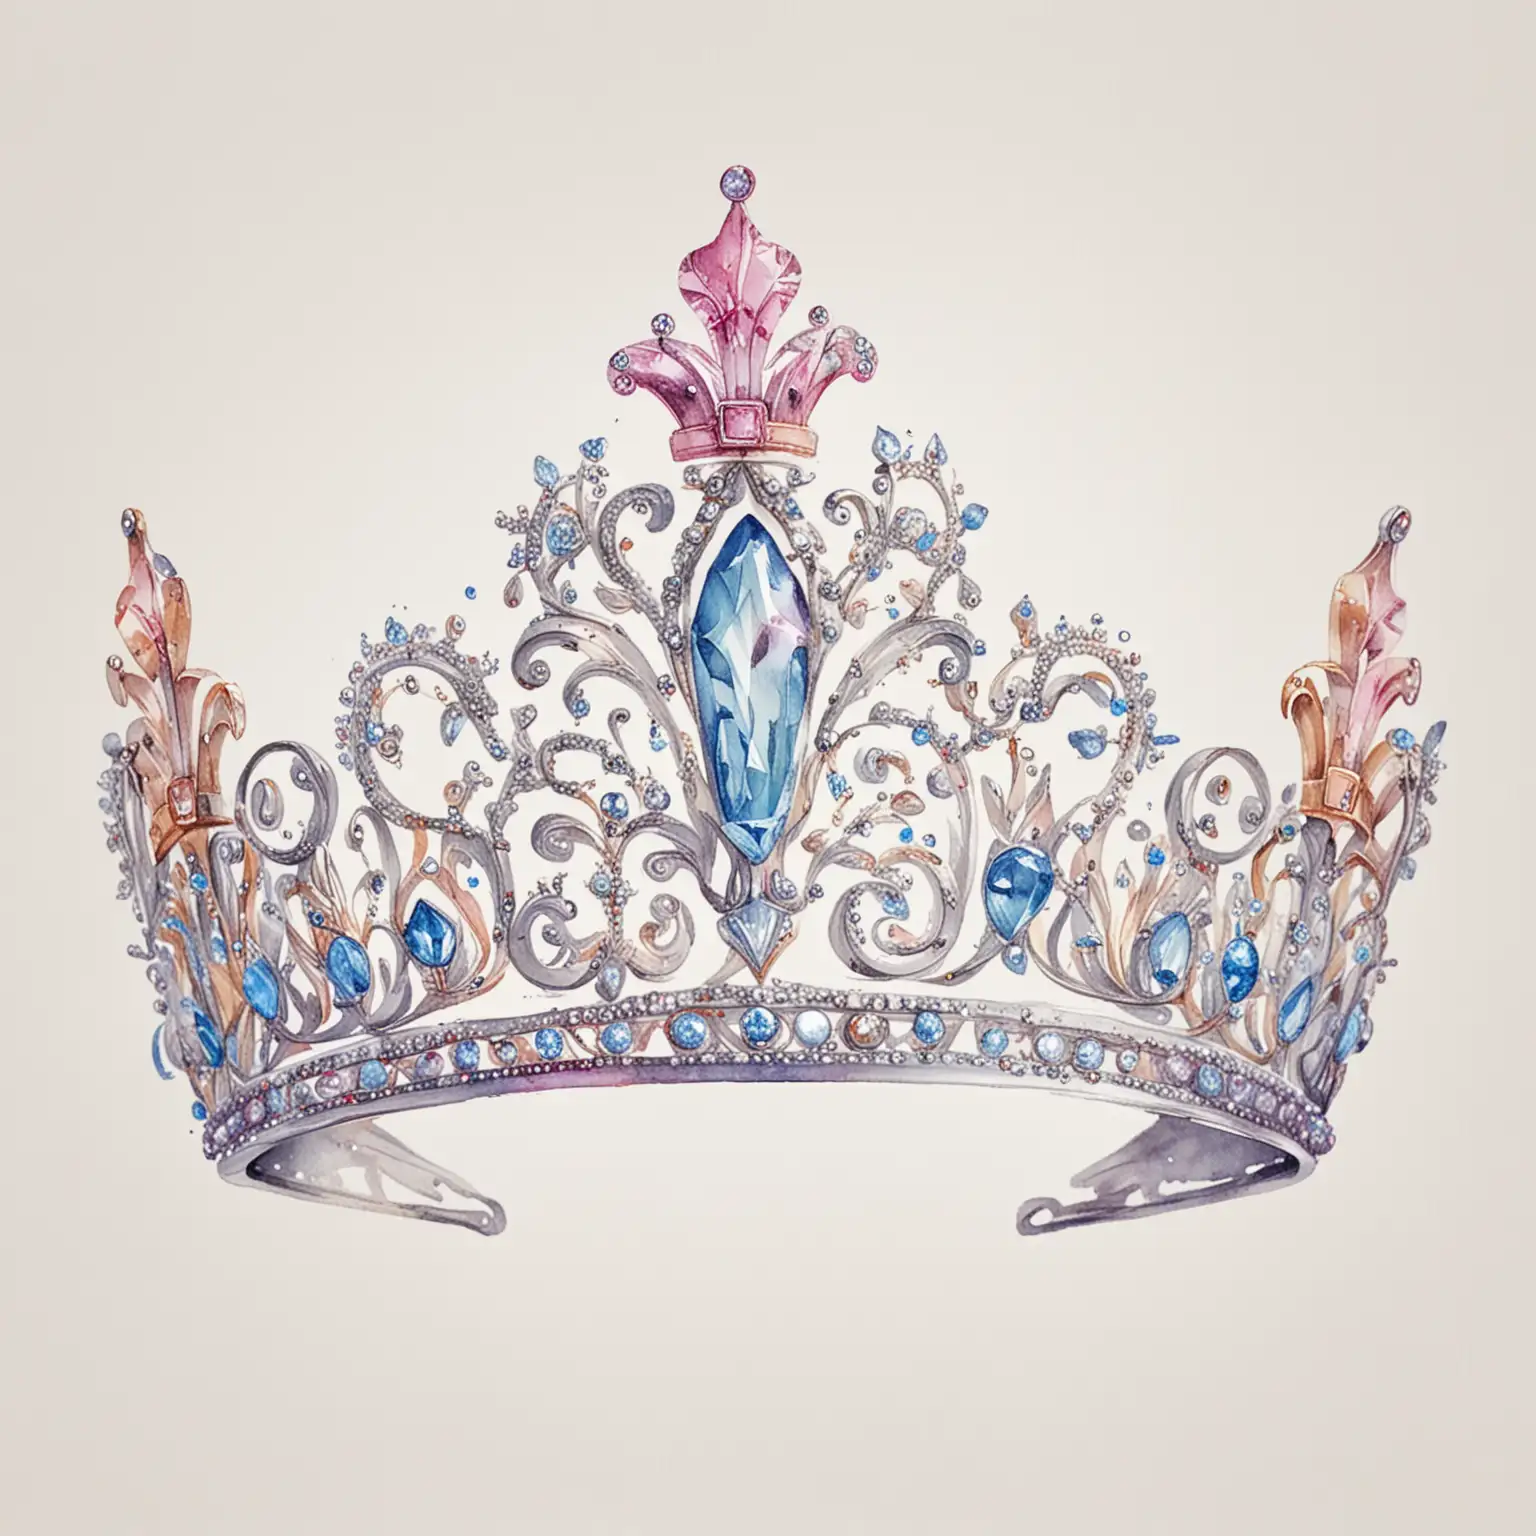 watercolor princess tiara on a white background